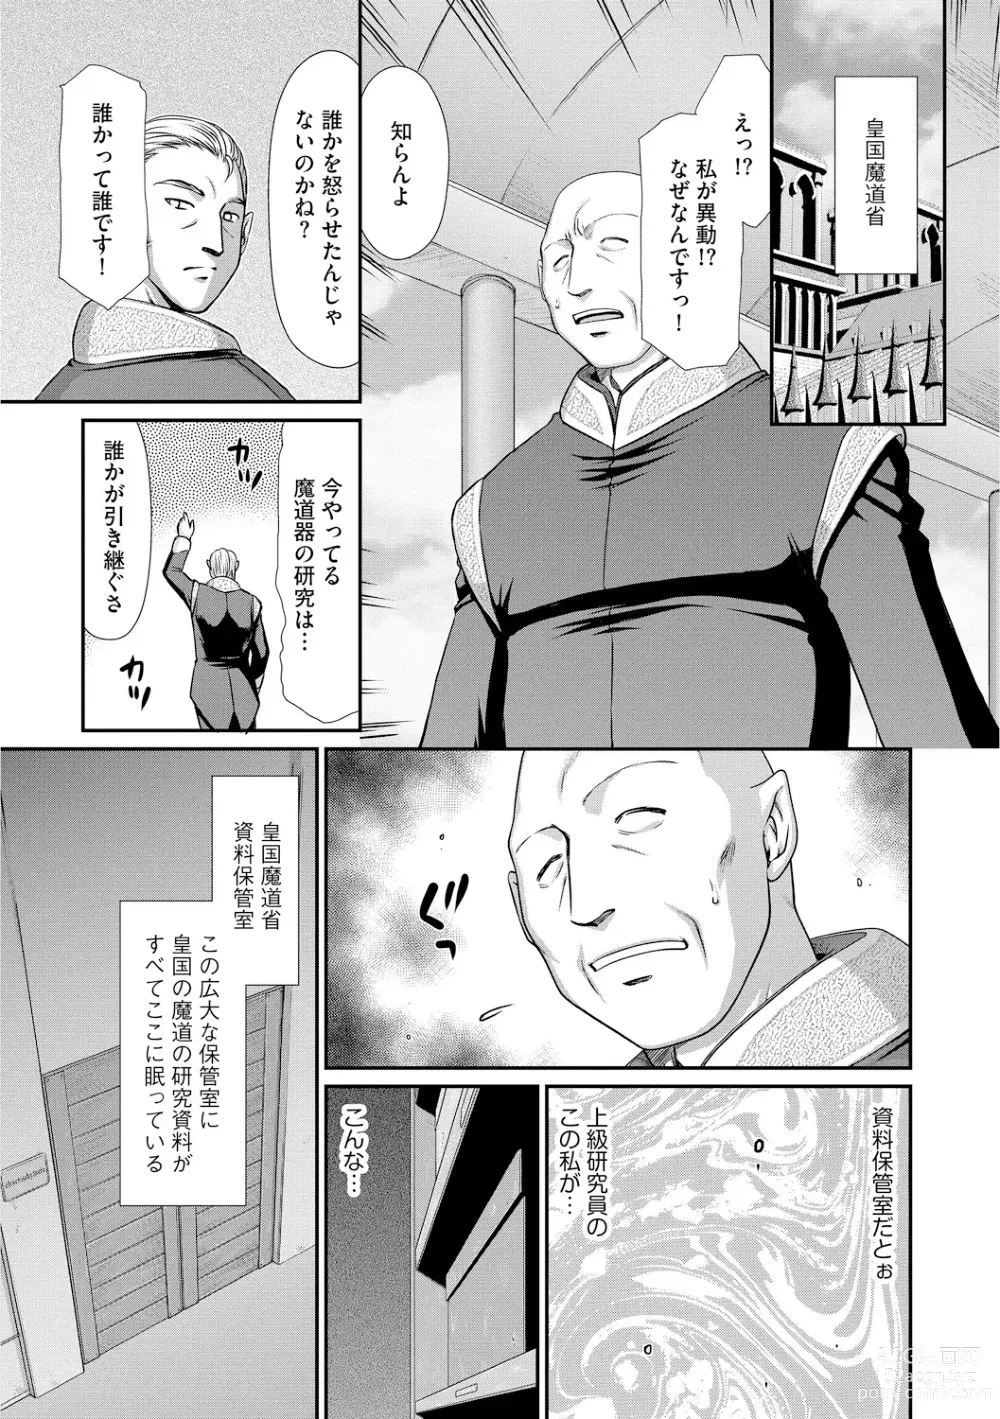 Page 9 of manga Ingoku no Kouki Dietlinde